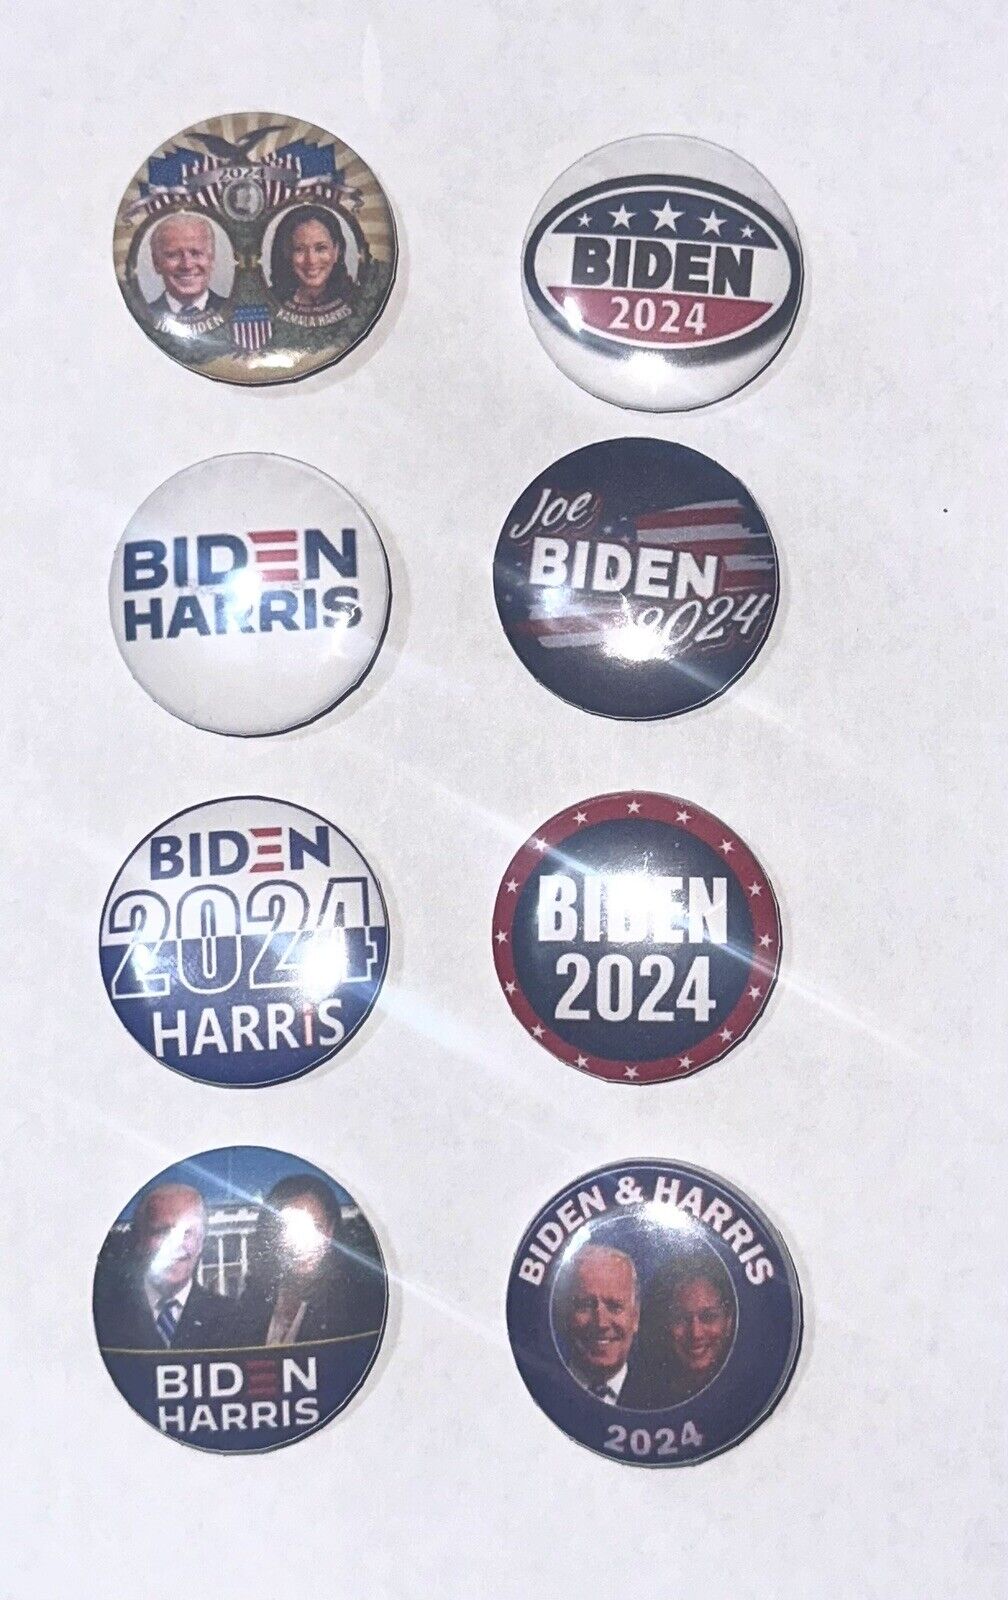 Biden Harris 2024 Campaign Pin Back Buttons 1.25” Elect Joe Biden